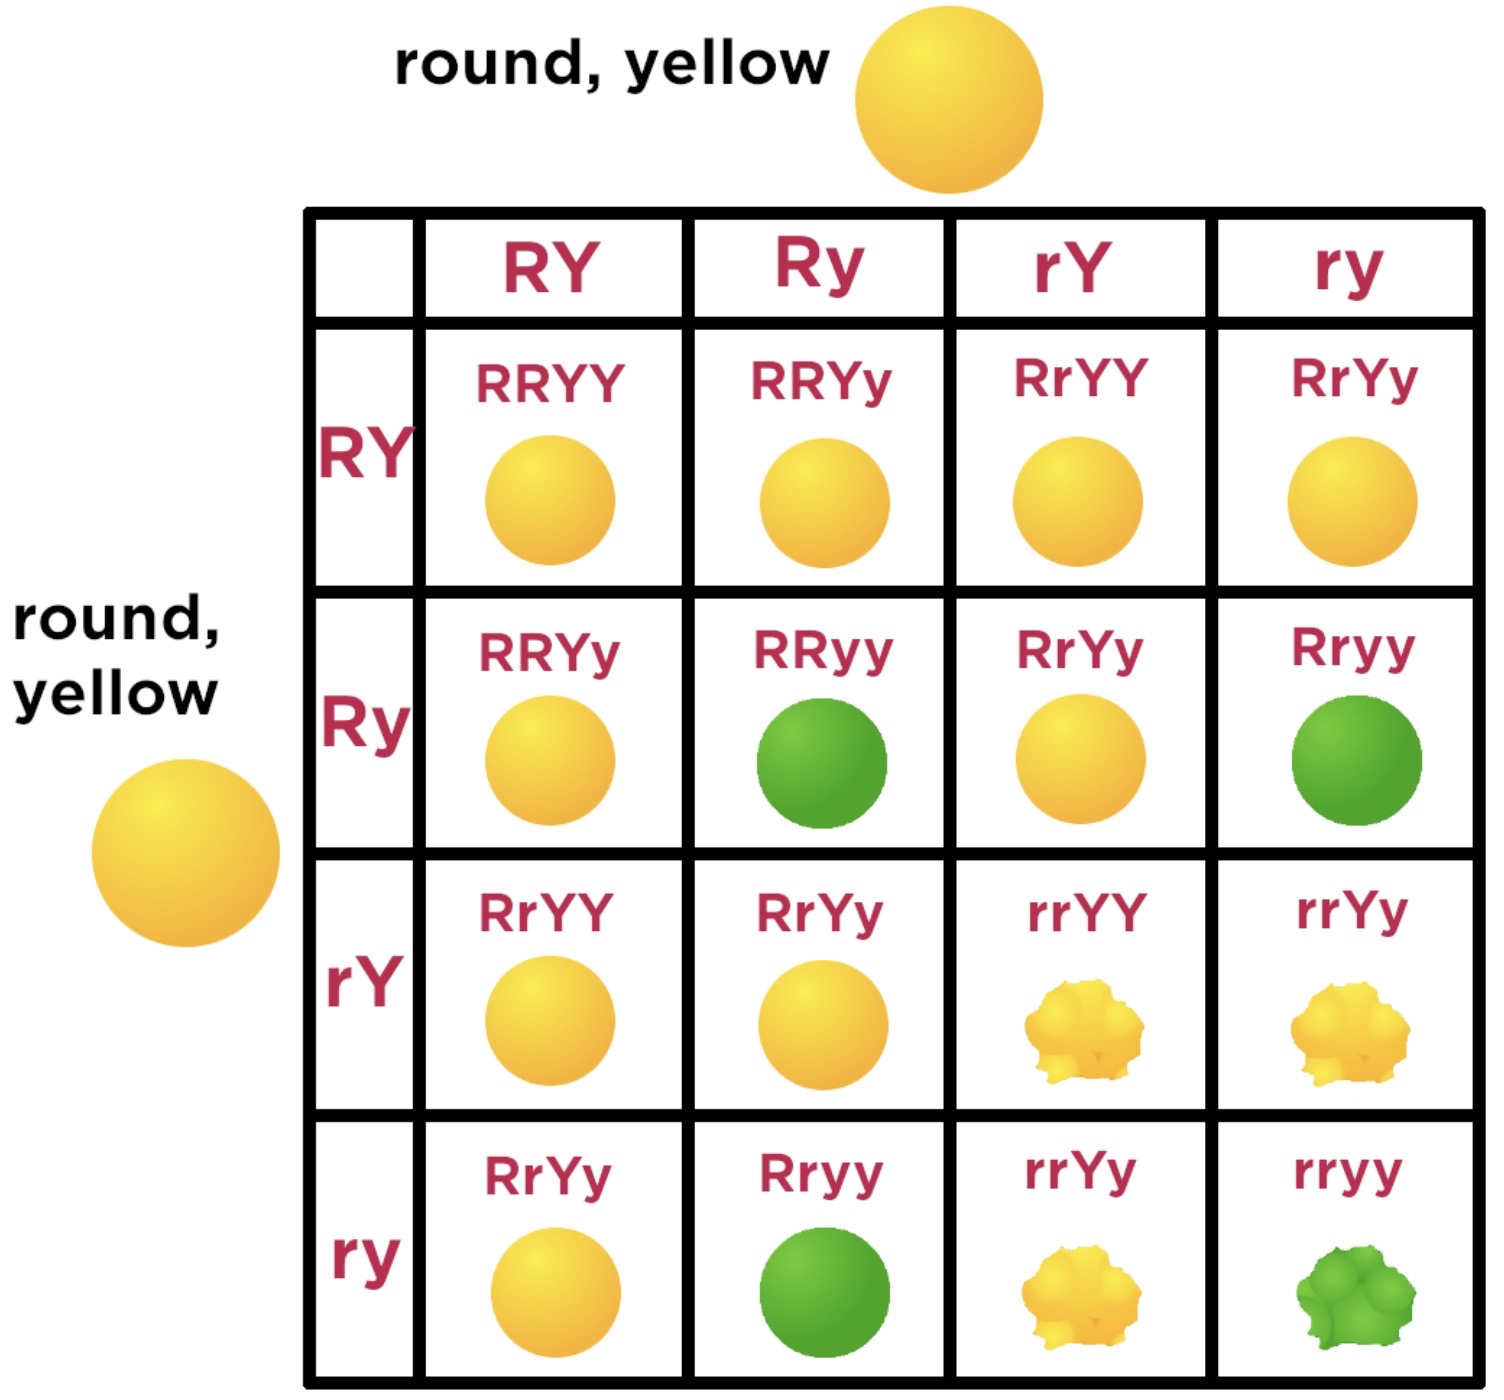 <p>Punnet Square shown in image</p><p>Phenotype ratios = 9:3:3:1</p><p>9 Yellow, round (YYRR, YyRR, YYRr, YyRr)</p><p>3 Green, round (yyRR, yyRr)</p><p>3 Yellow, wrinkled (YYrr, Yyrr)</p><p>1 Green, wrinkled (yyrr)</p>